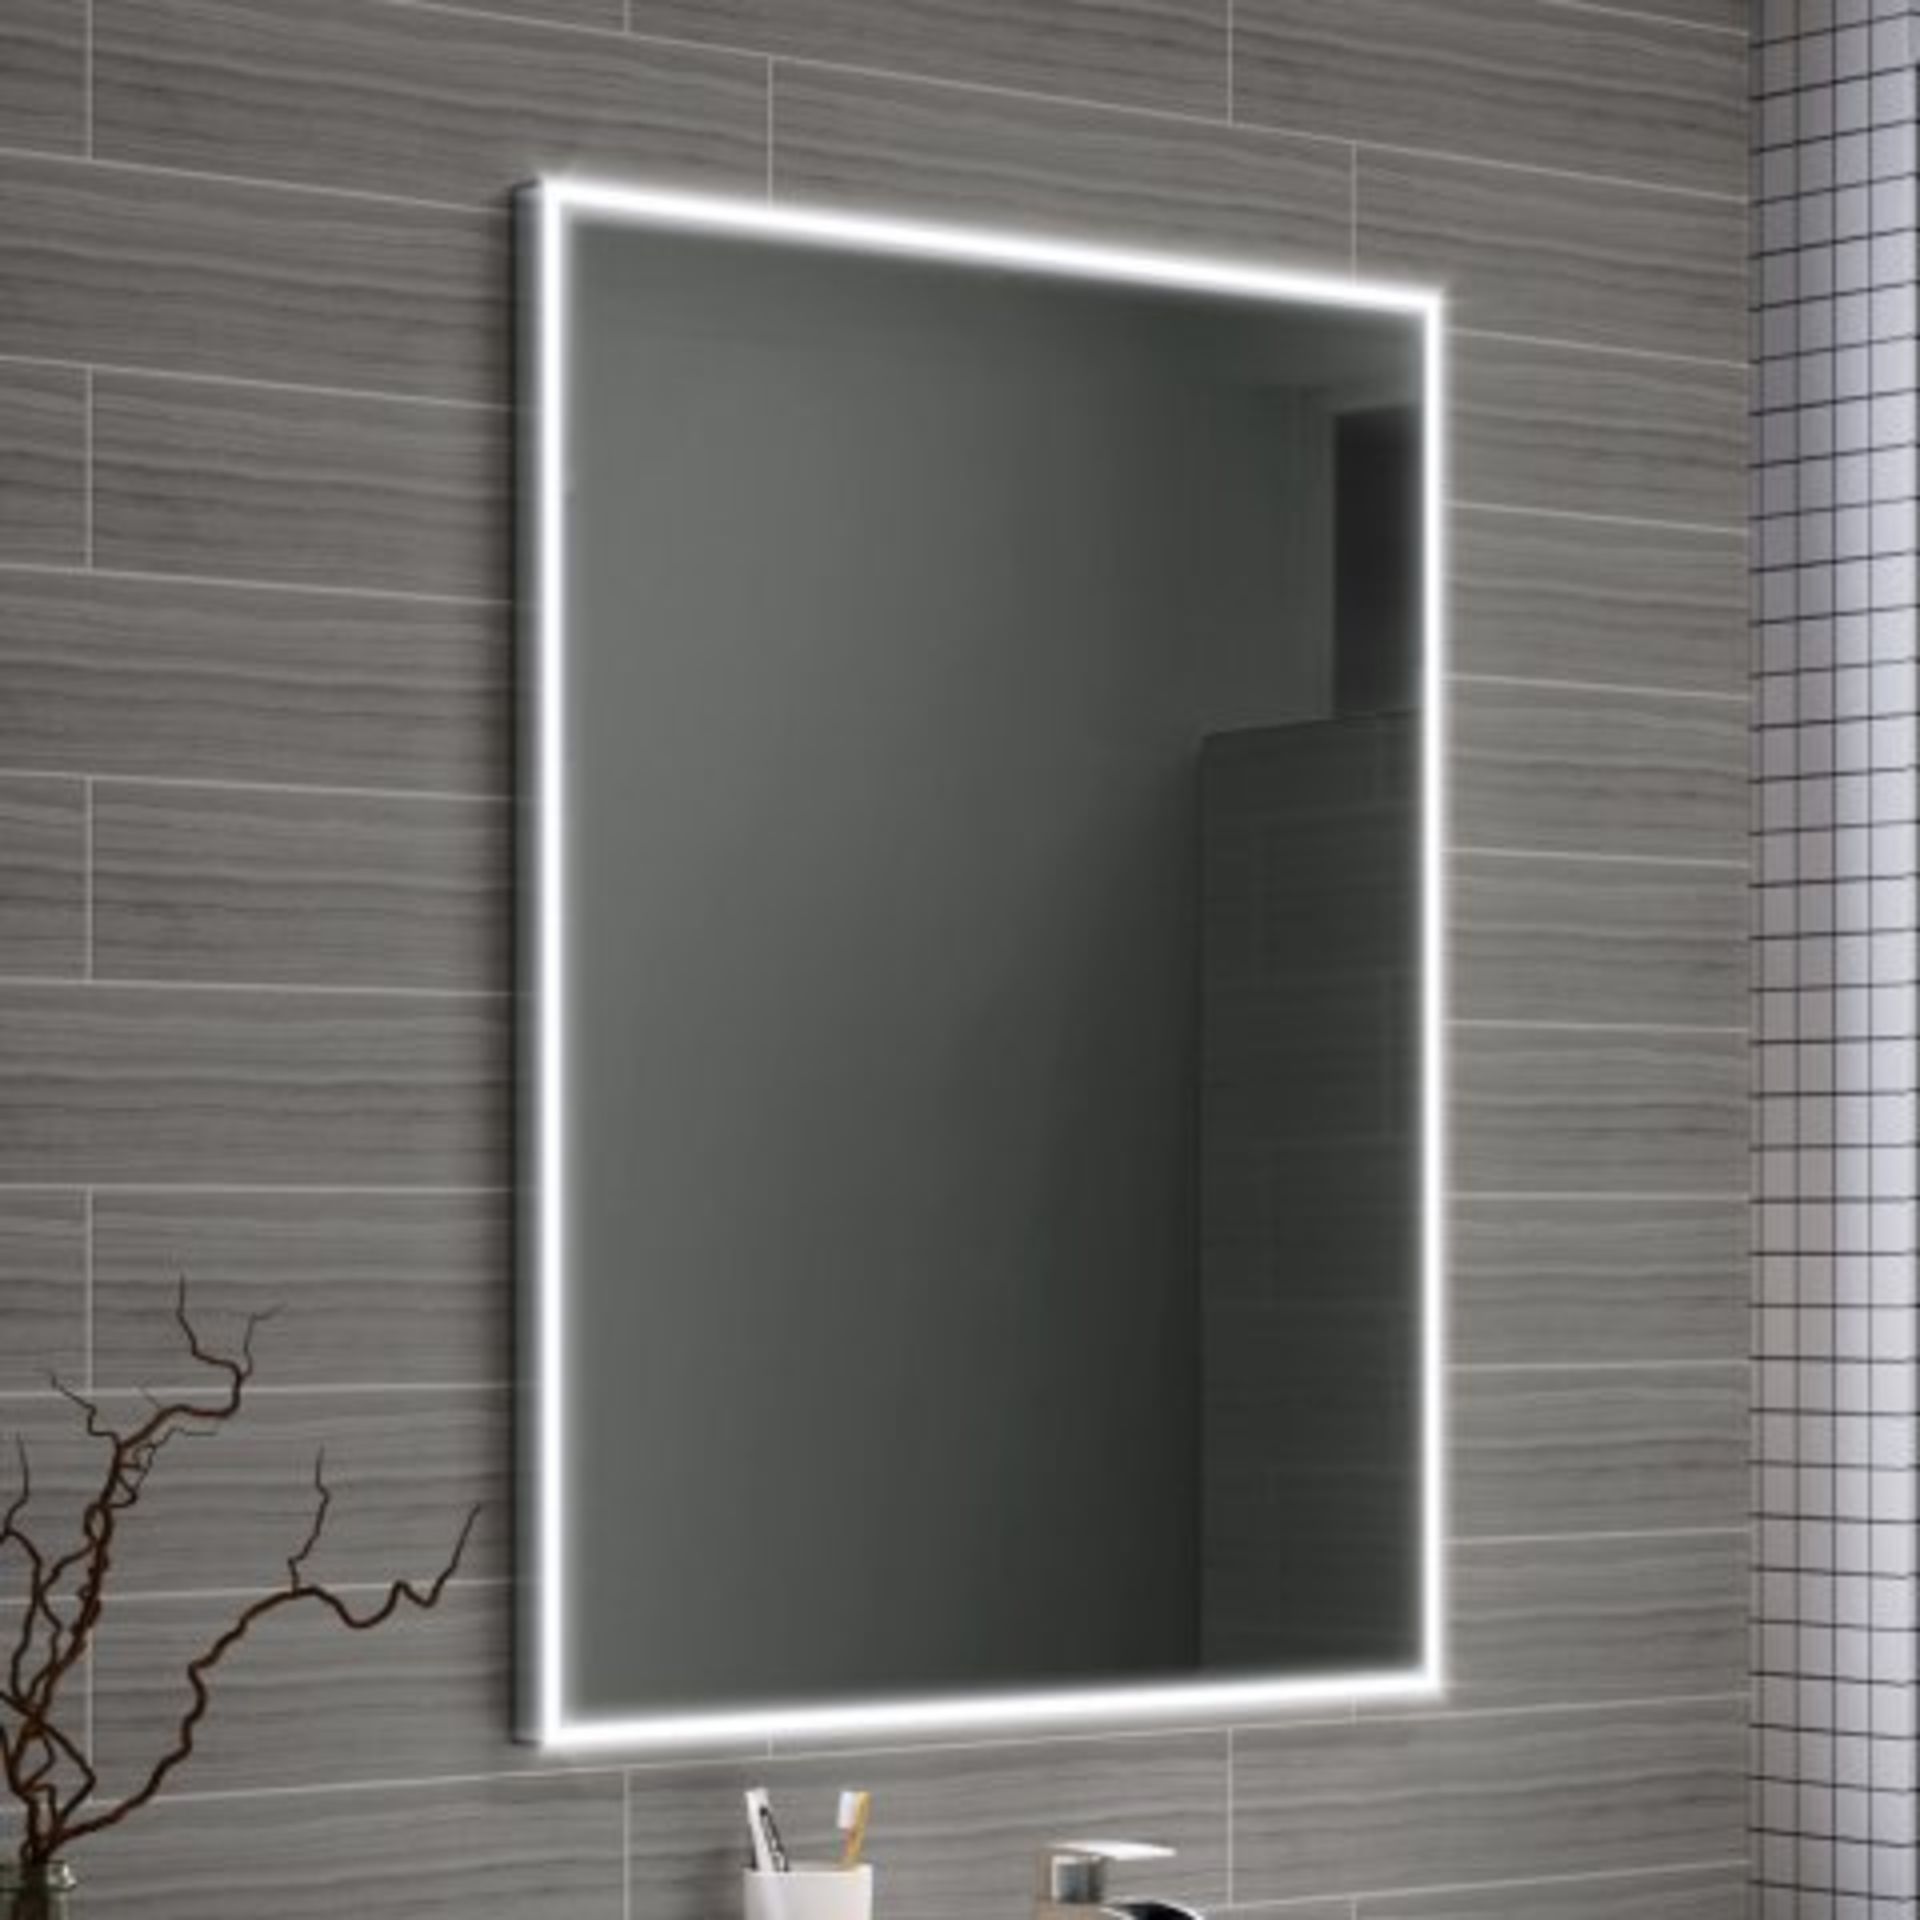 (I69) 800x600mm Cosmic Illuminated LED Mirror RRP £349.99 A rectangular mirror with LED